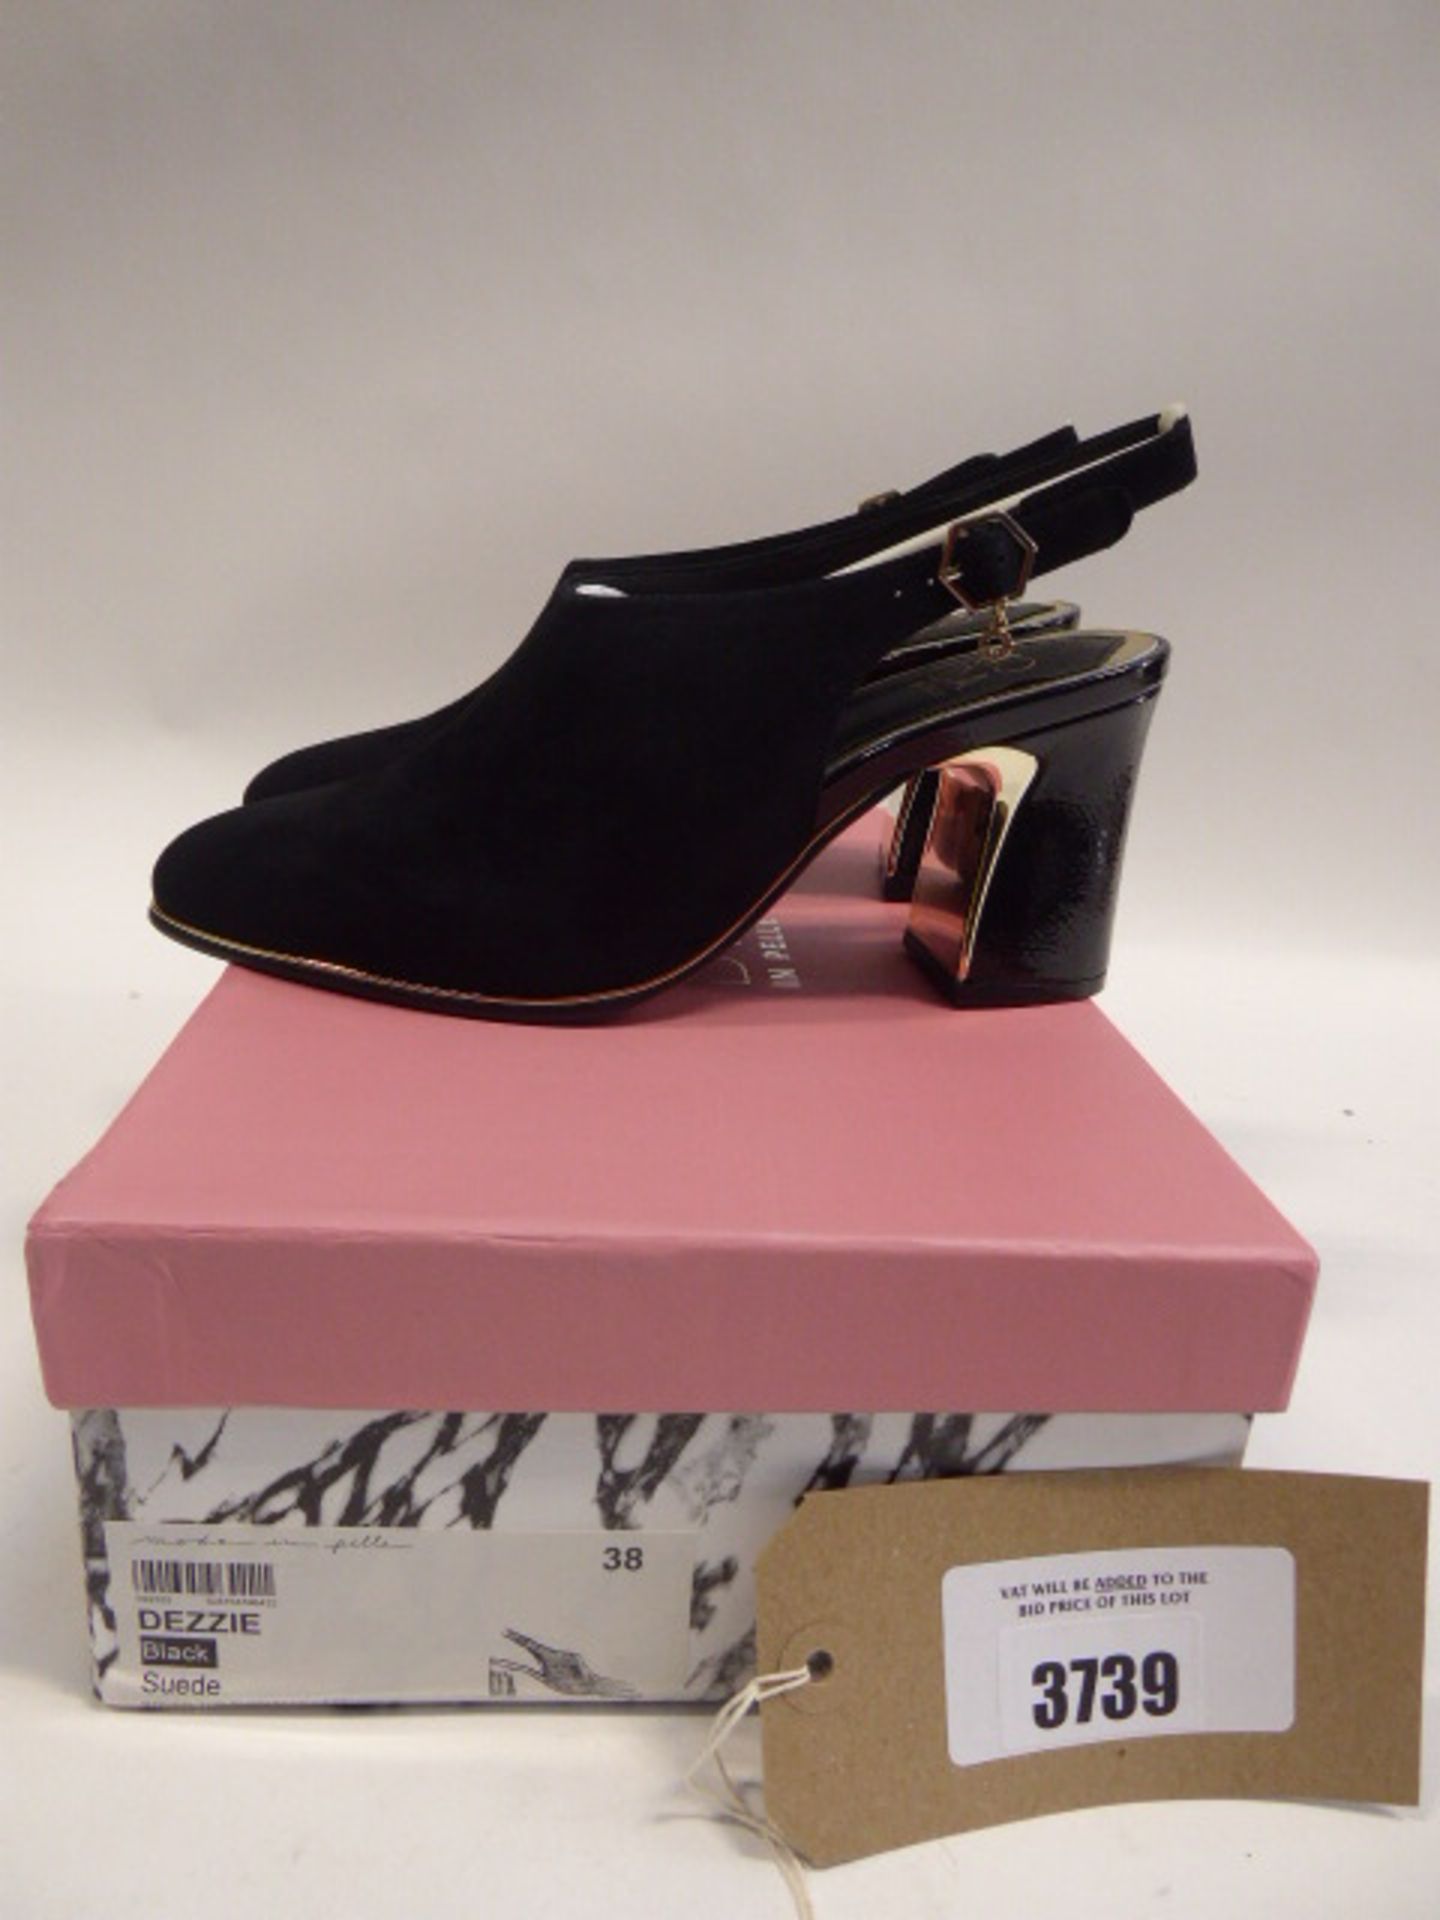 Moda in Pelle Dezzie black suede heels size EU 38